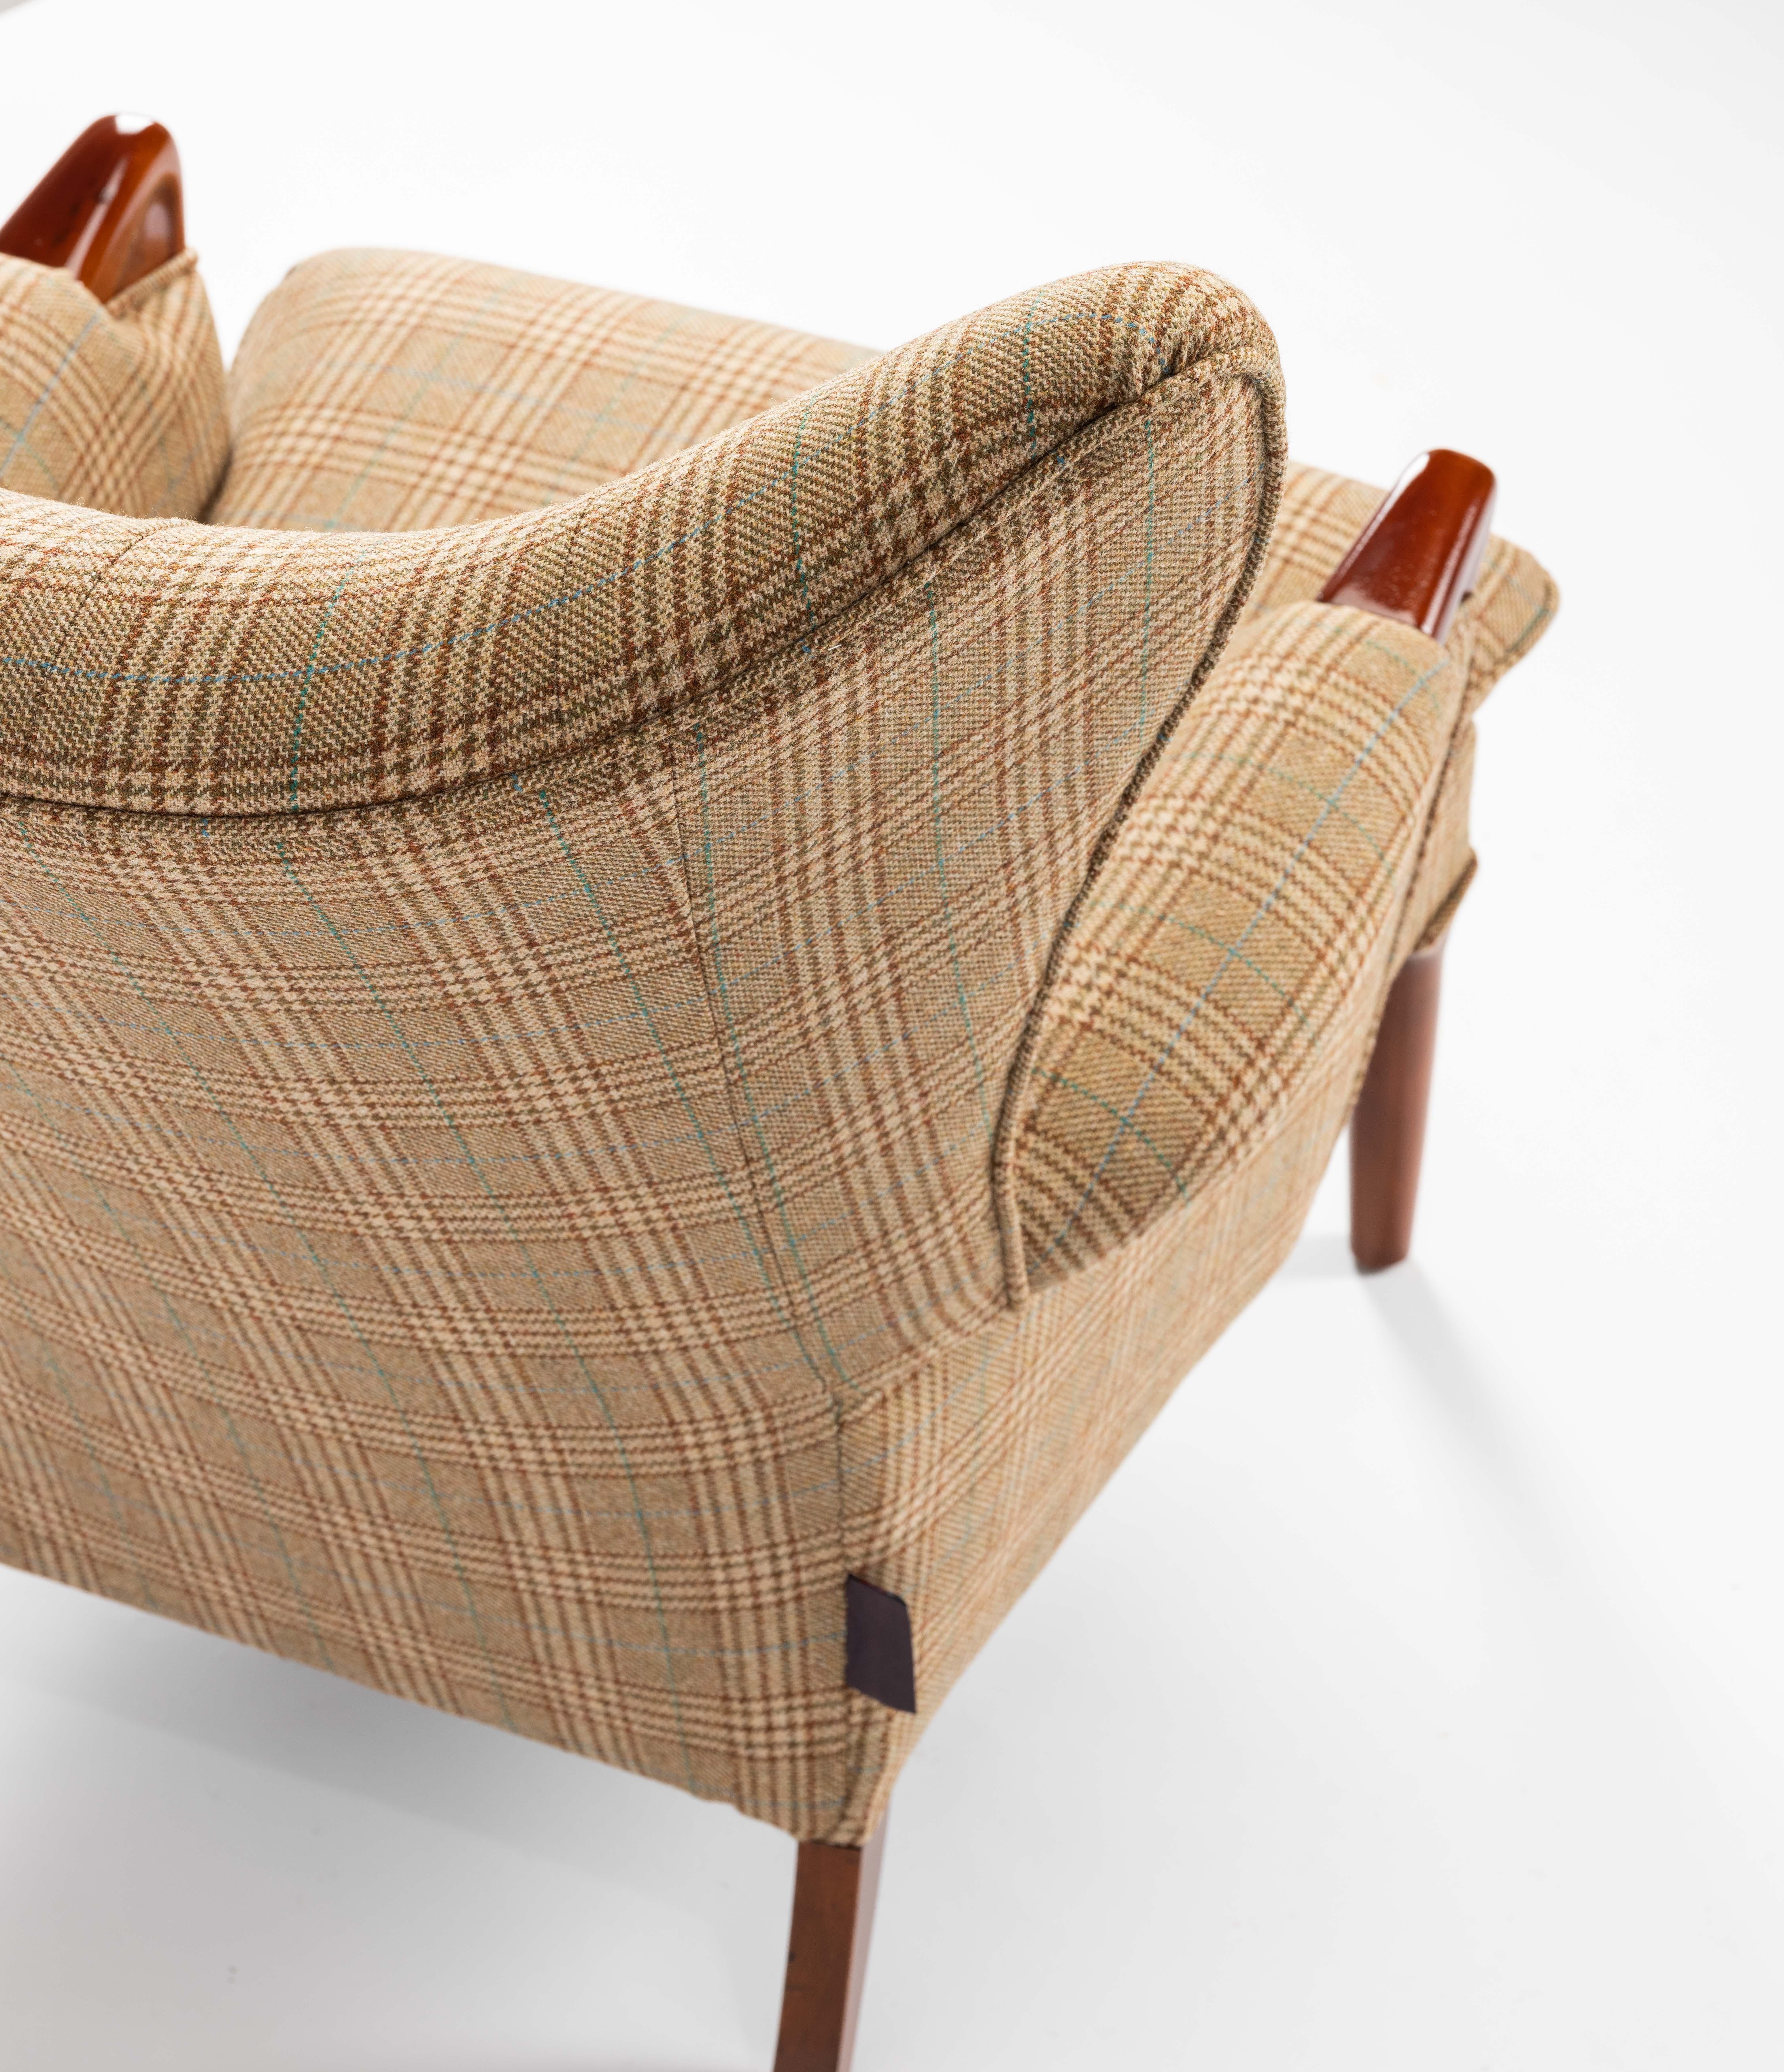 British Midcentury Vintage Wingback Chairs Reupholstered in Yorkshire Tweed, circa 1960s